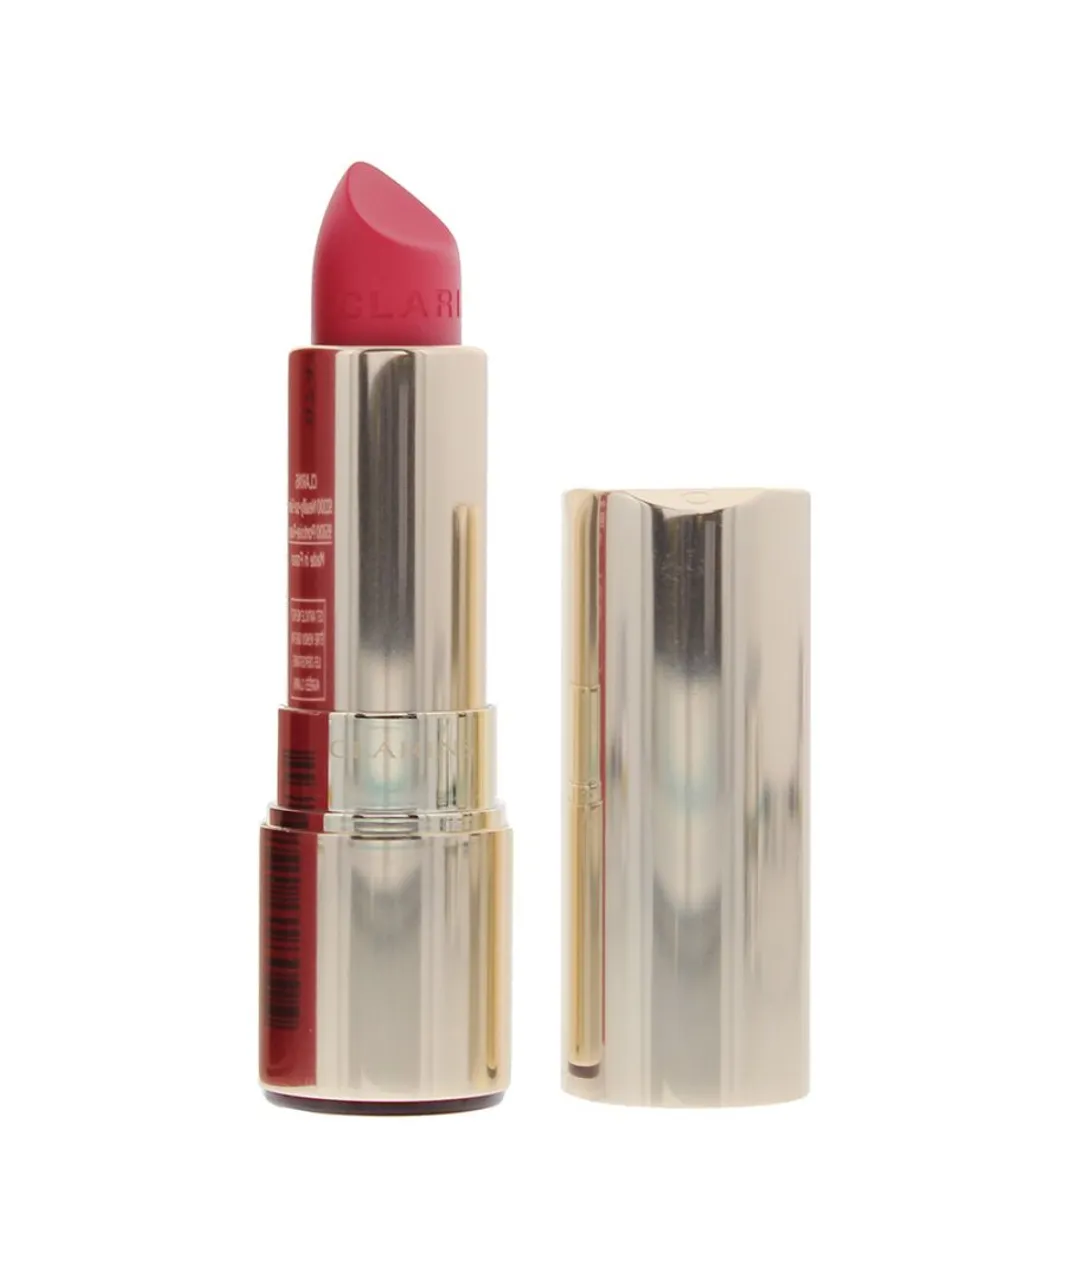 Clarins Womens Joli Rouge Velvet Matte & Moisturizing Long Wearing Lipstick 760V Pink Cranberry 3.5g - One Size